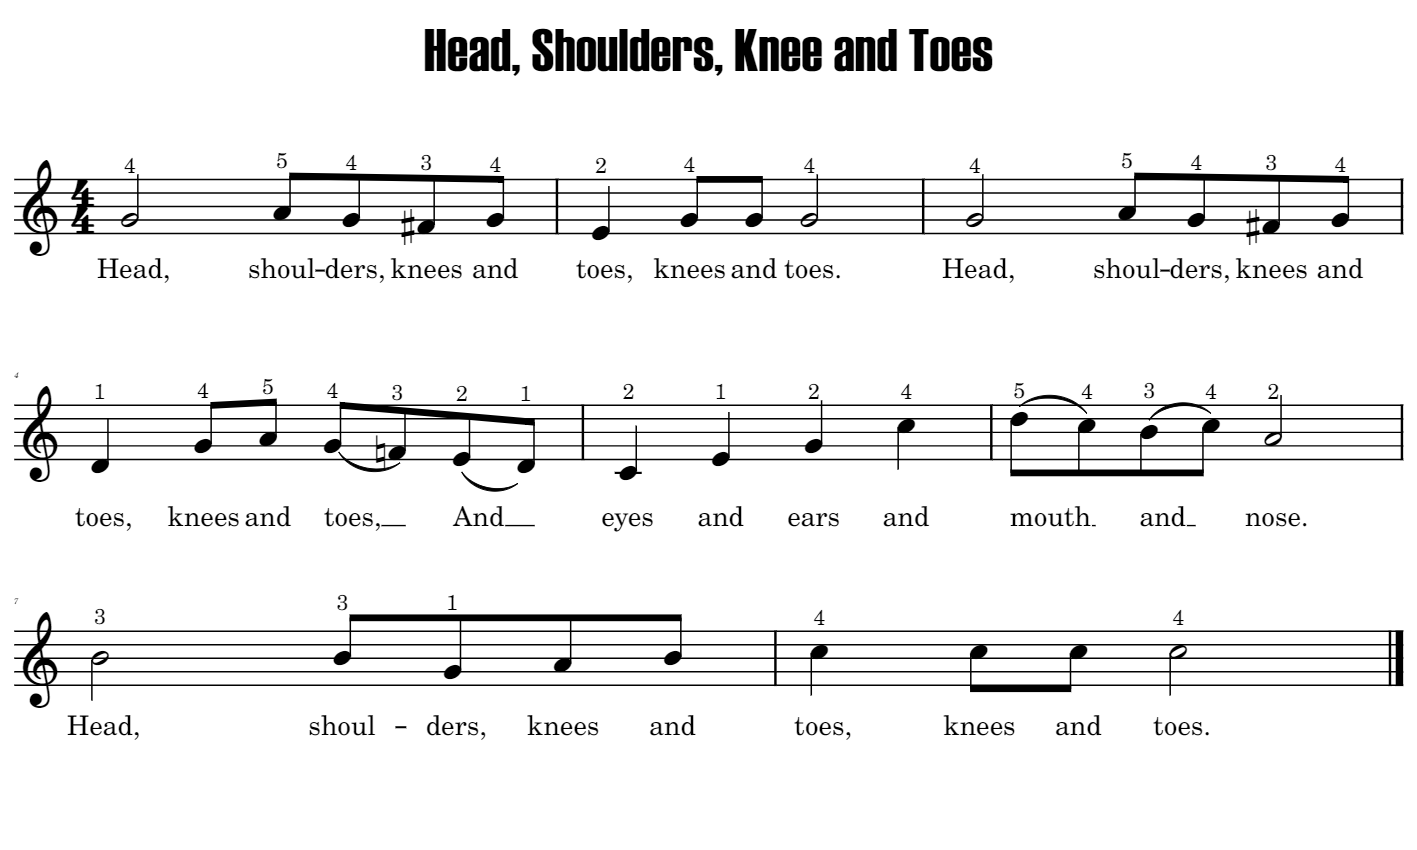 Английская песня head. Head Shoulders Knees and Toes. Head and Shoulders Knees and Toes песня. Текст песни head Shoulders Knees and Toes. Нев Shoulders Knees Toes.